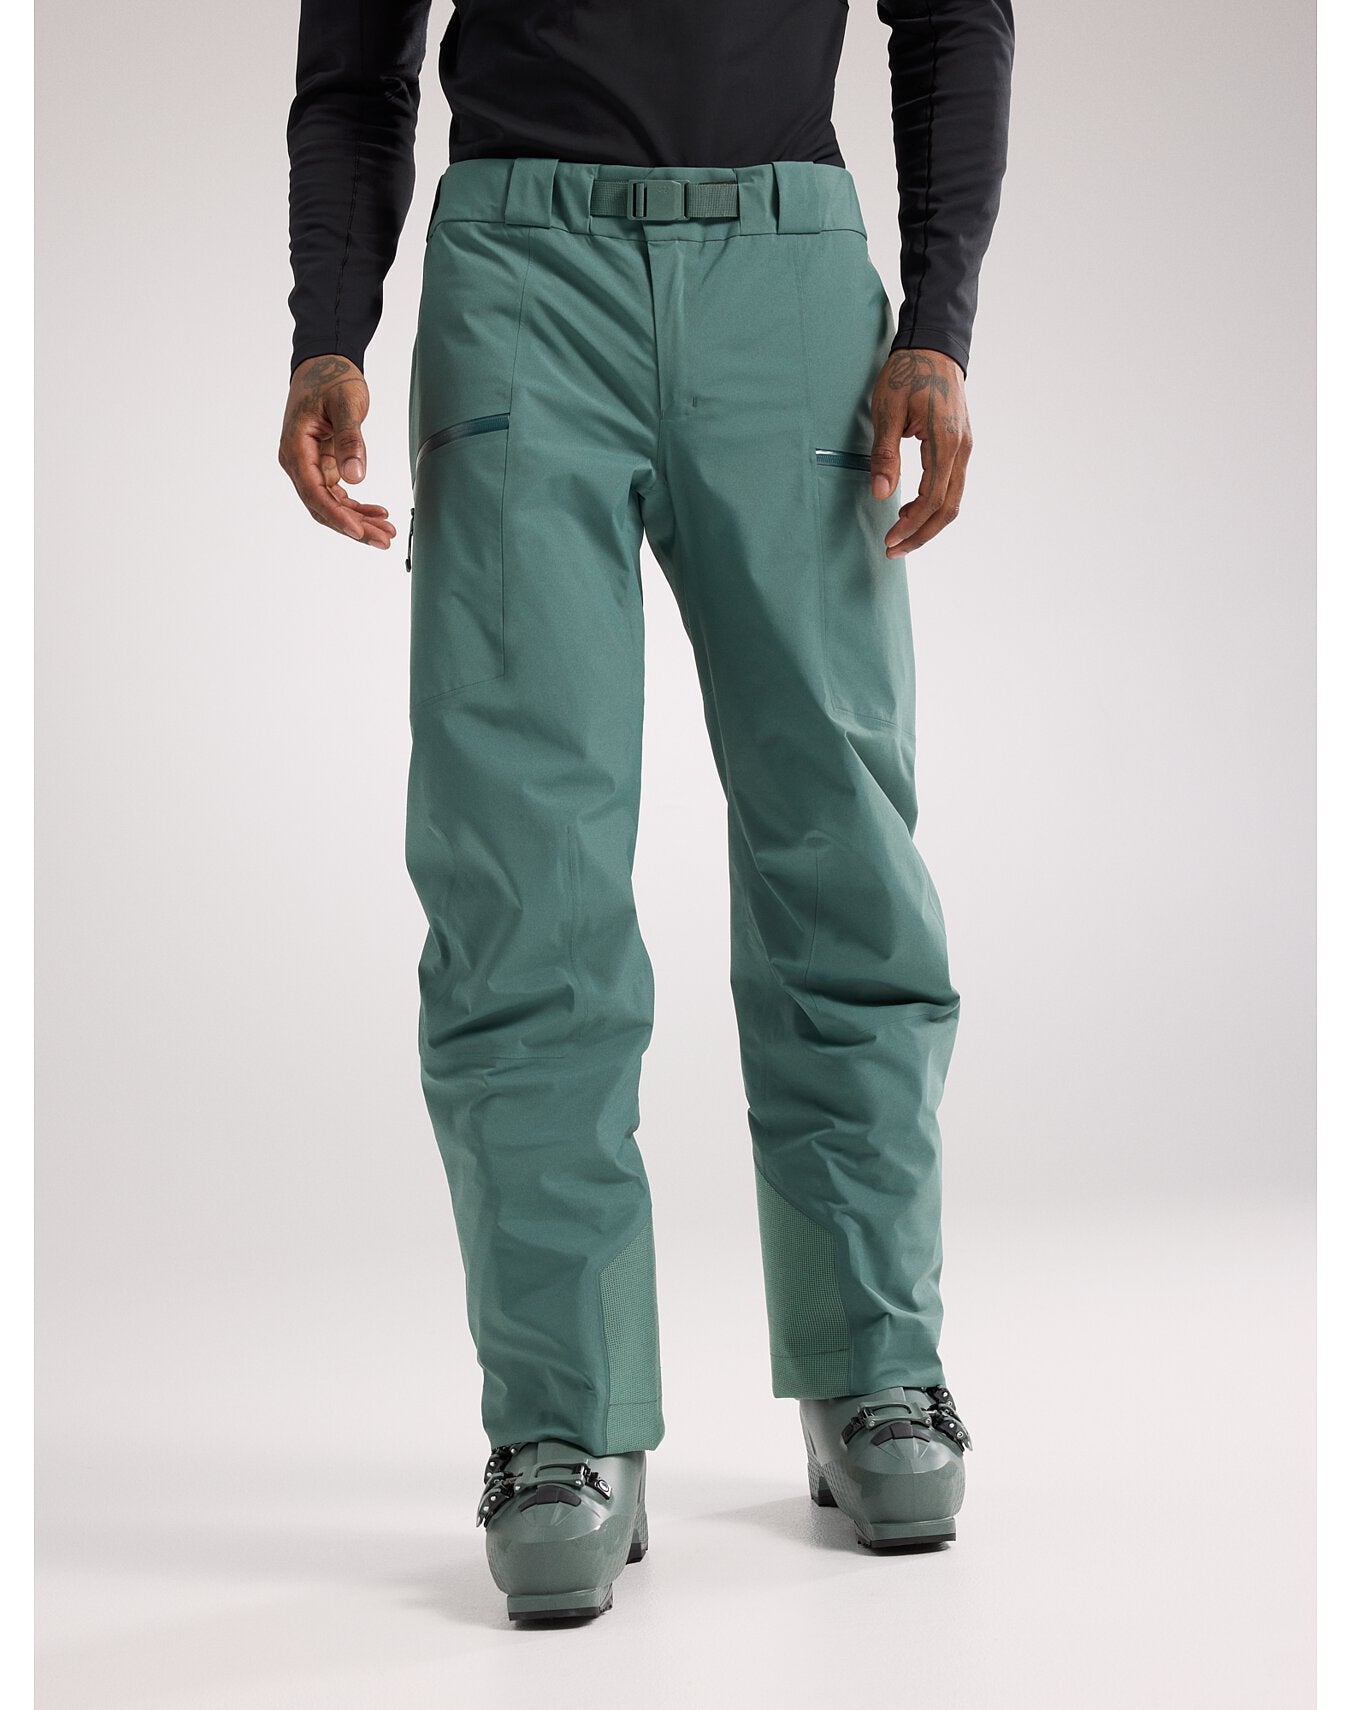 Essentials Men's Waterproof Insulated Ski Pant, Black, Medium :  : Clothing, Shoes & Accessories